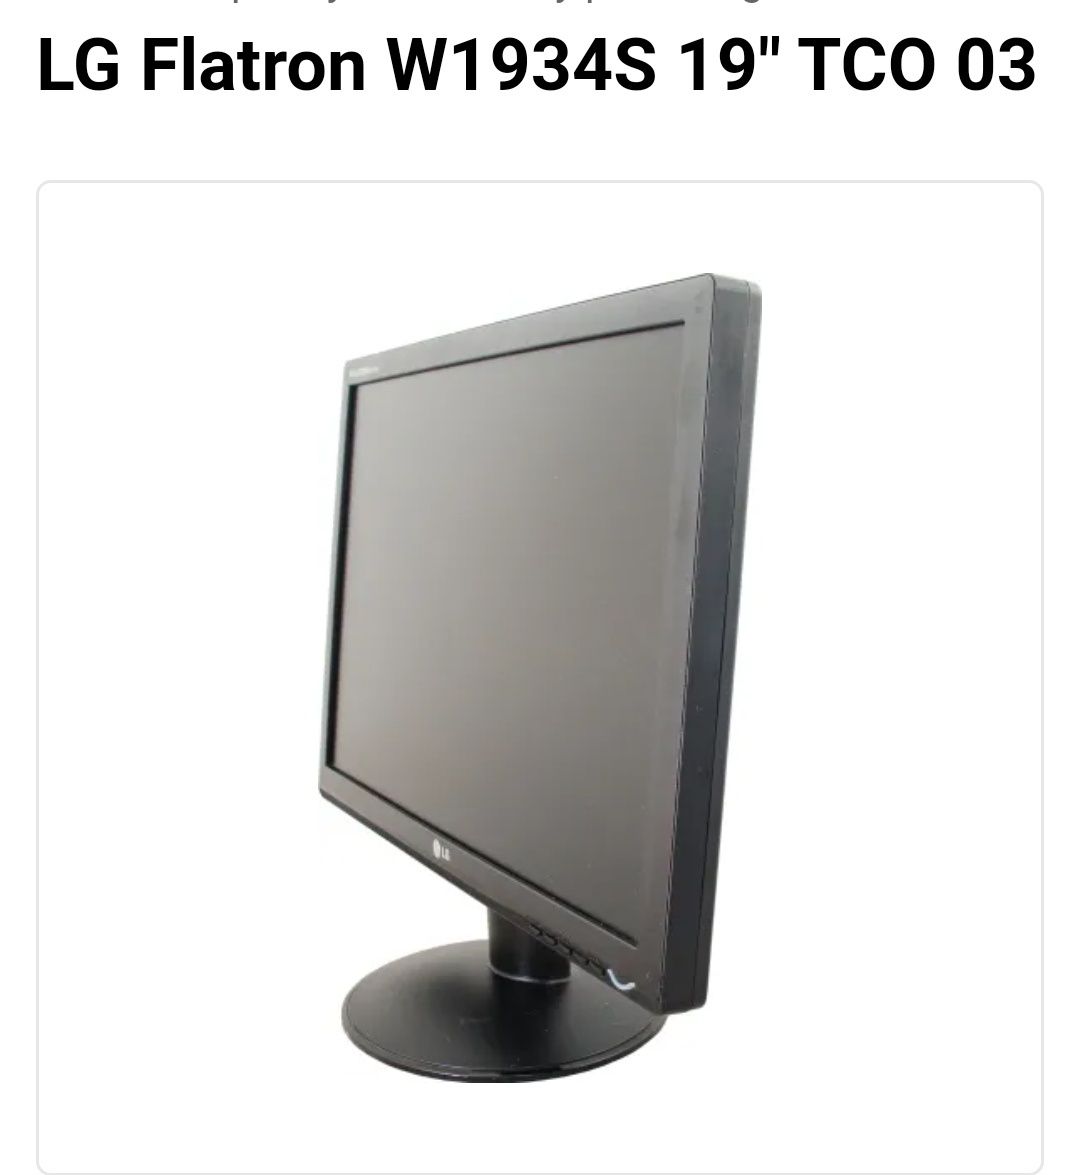 Monitor LG Flatron W1943SS